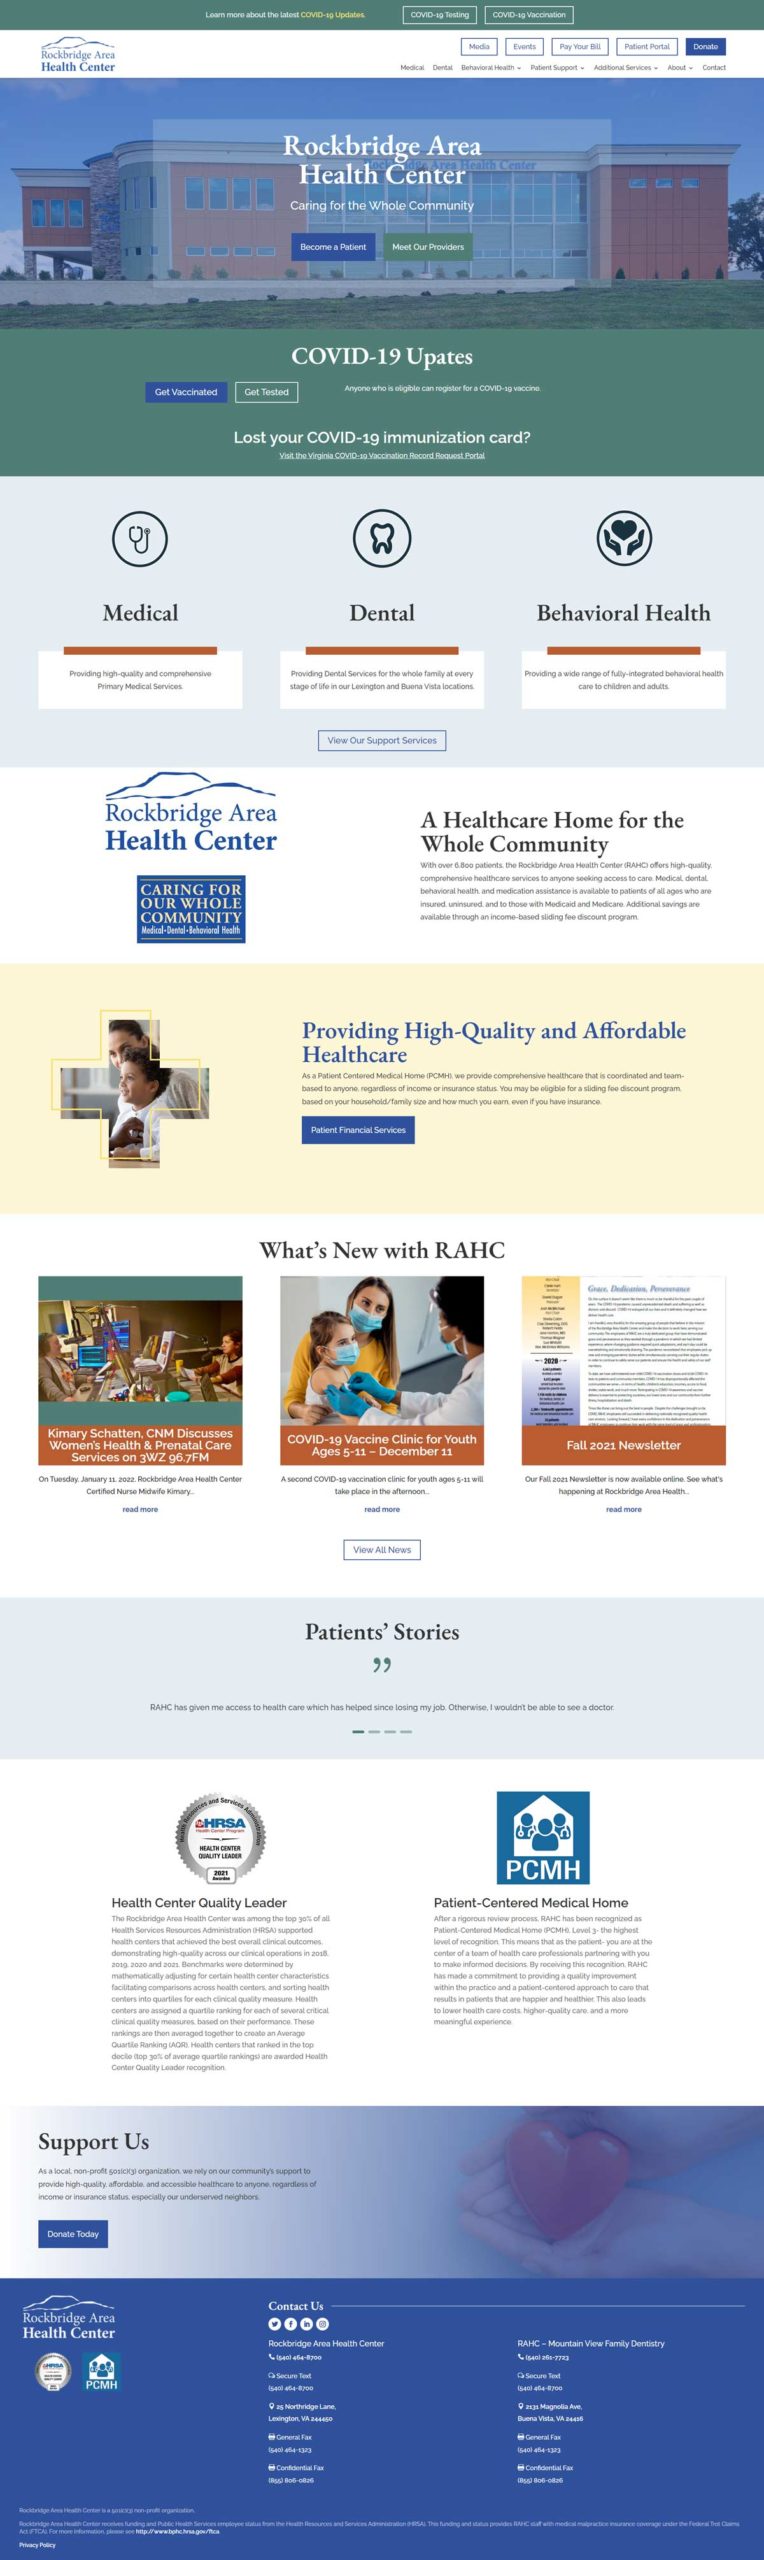 Rockbridge Area Health Center homepage